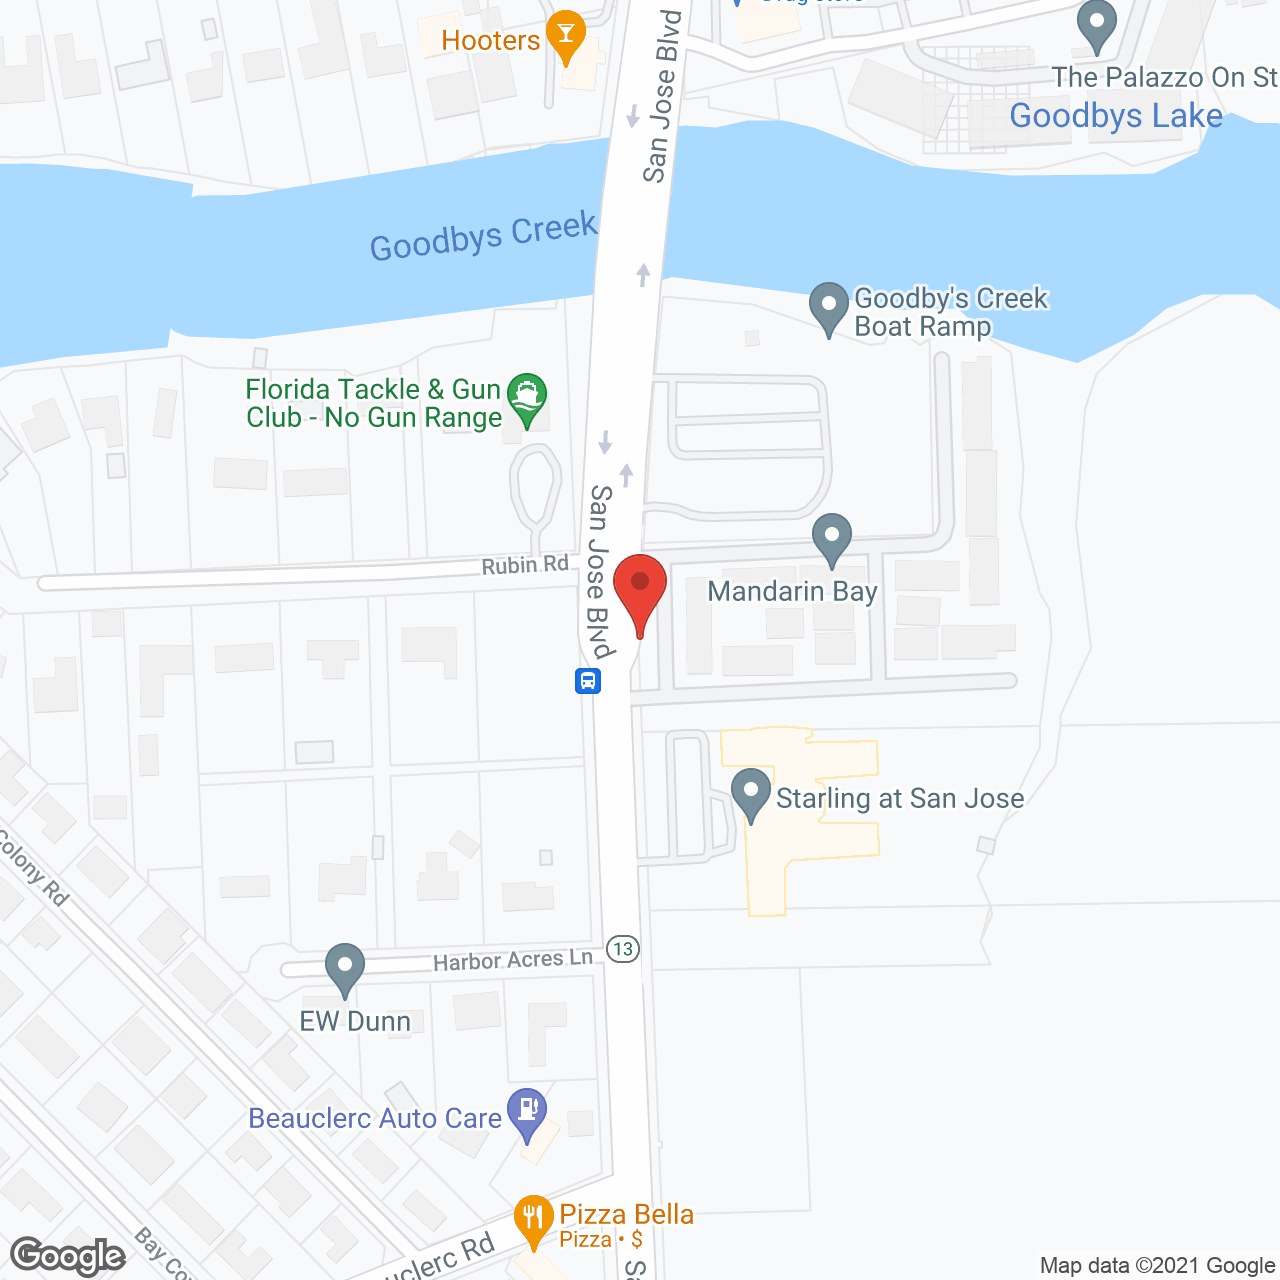 Starling at San Jose in google map